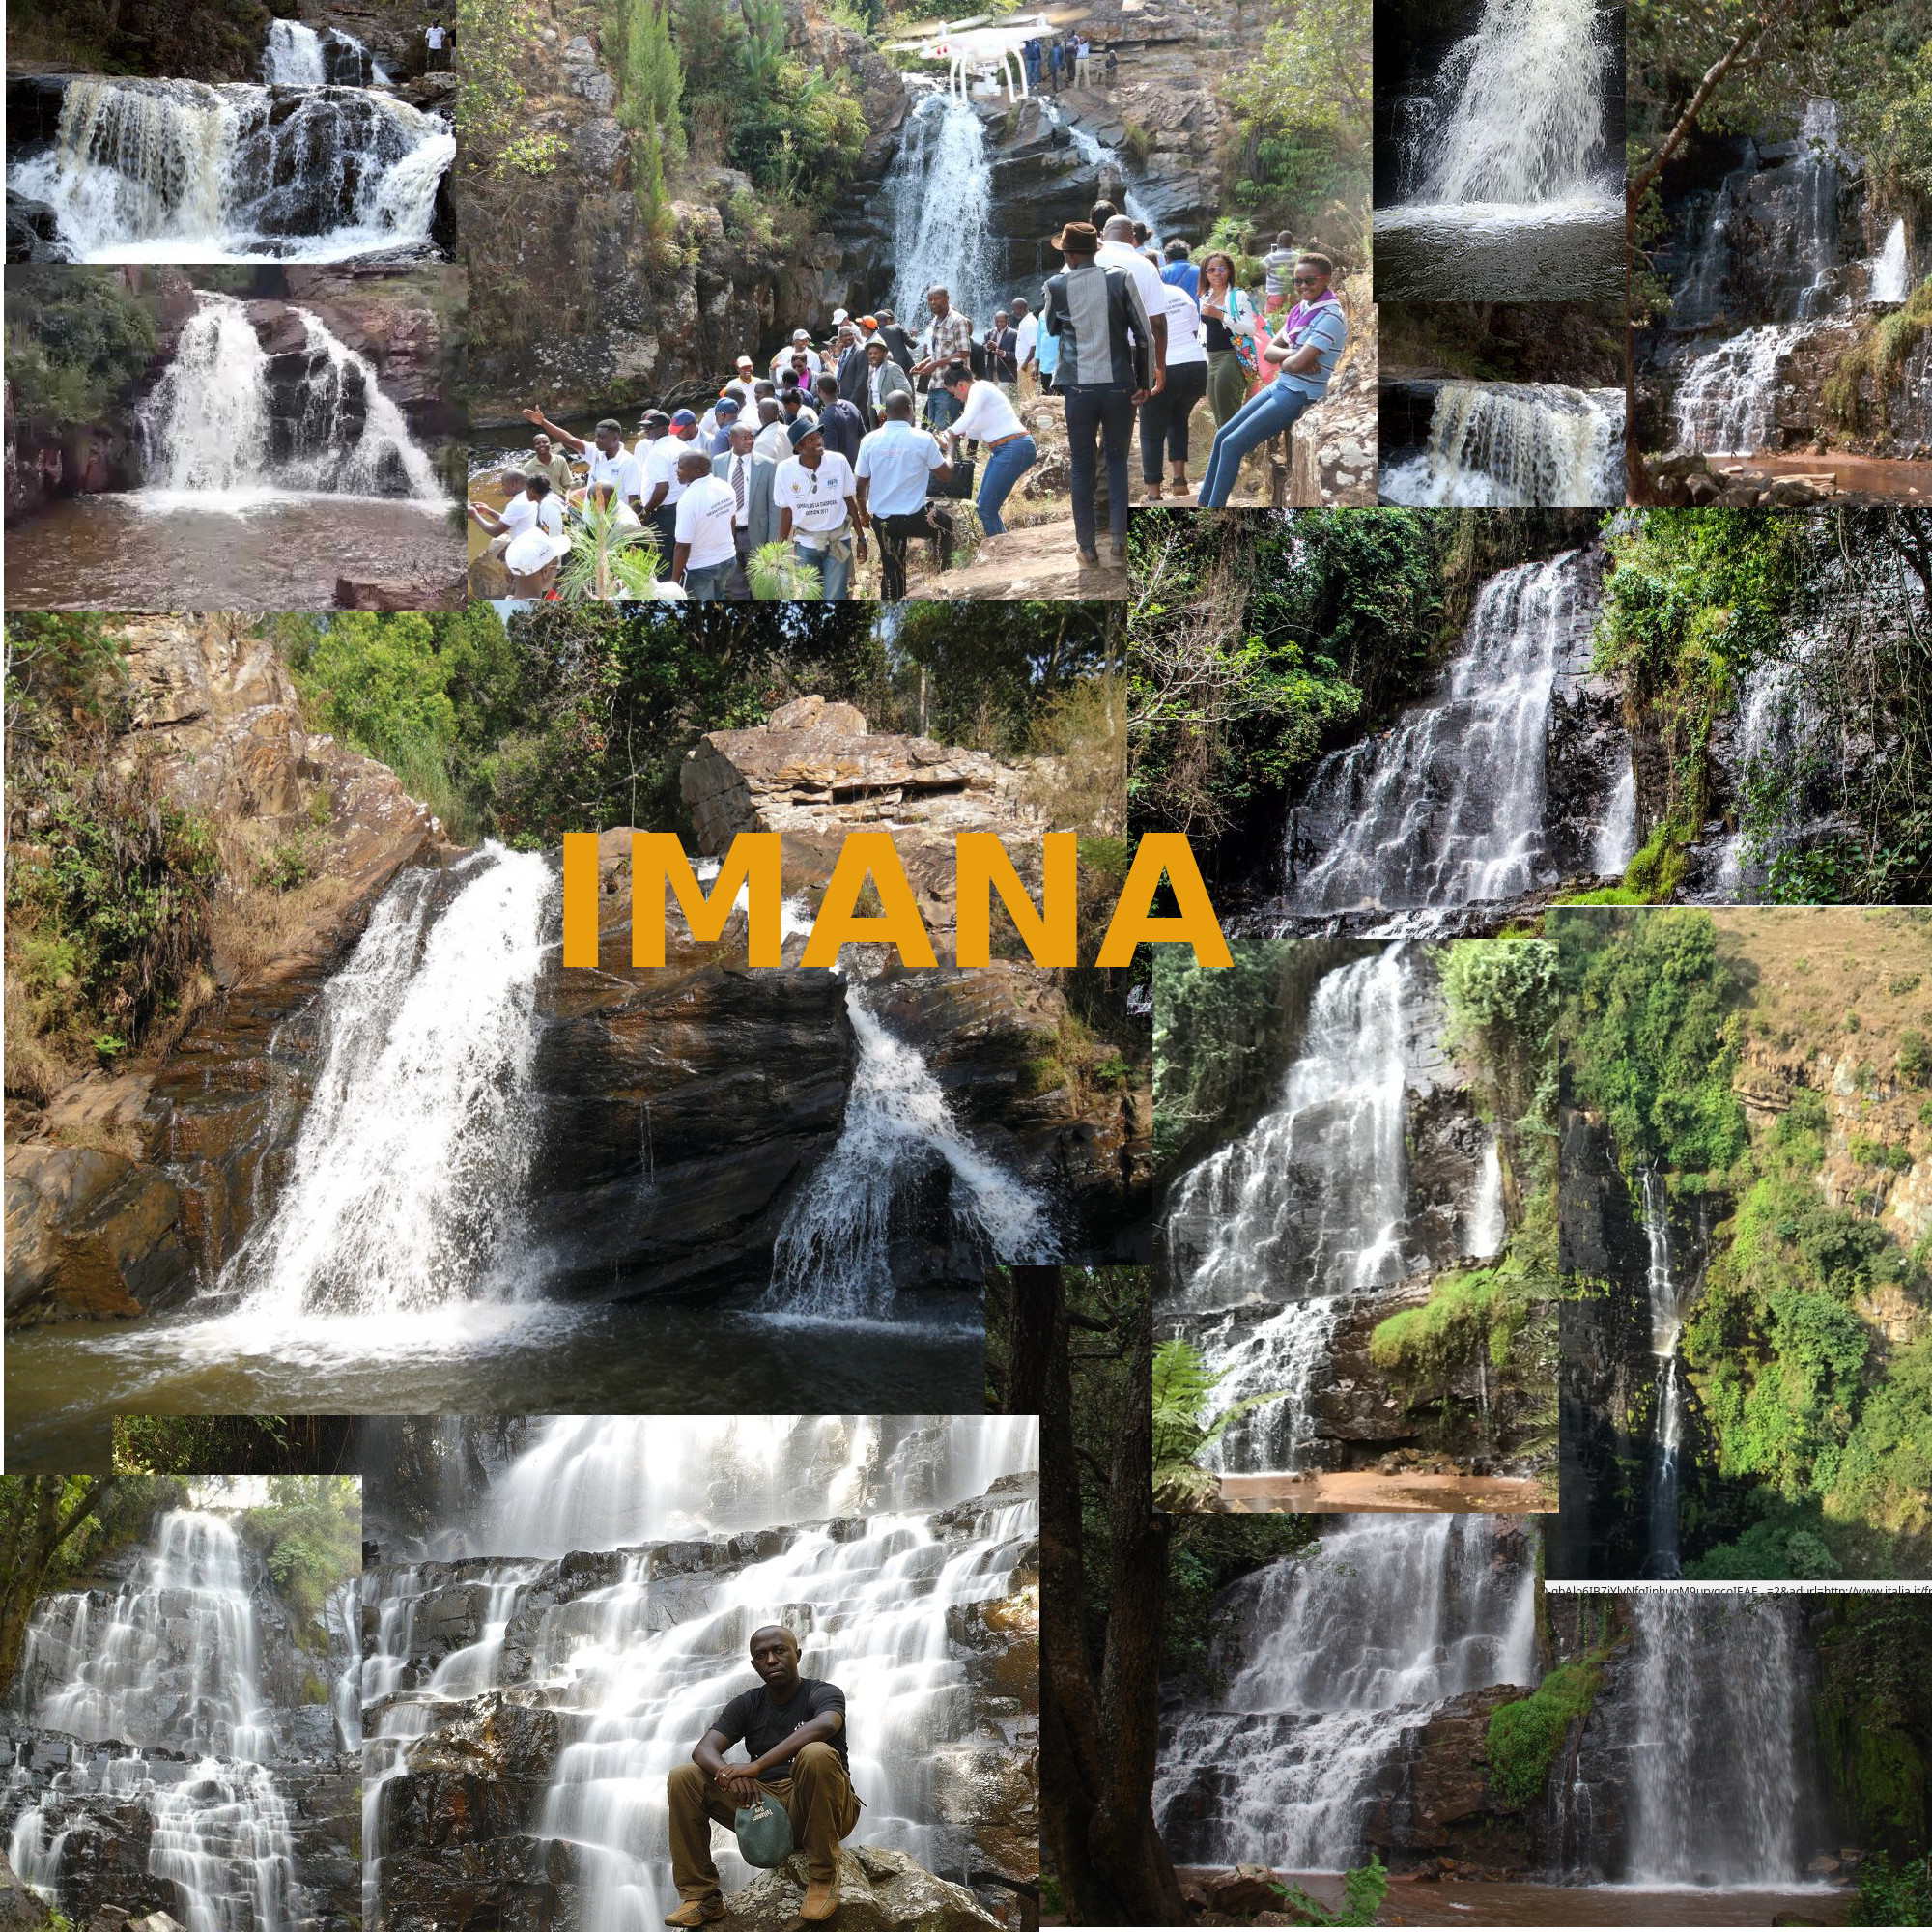 "Agasumo ka Mwaro". Photo : Province MWARO | Les chutes de Karera Photo : tourismegrandslacs | Les chutes de Gasumo : http://tsf2012.burundi.free.fr | Chute D'Eau de Shanga, RUTANA : https://pixabay.com/fr/photos/chute-d-eau-shanga-burundi-rutana-2852069/